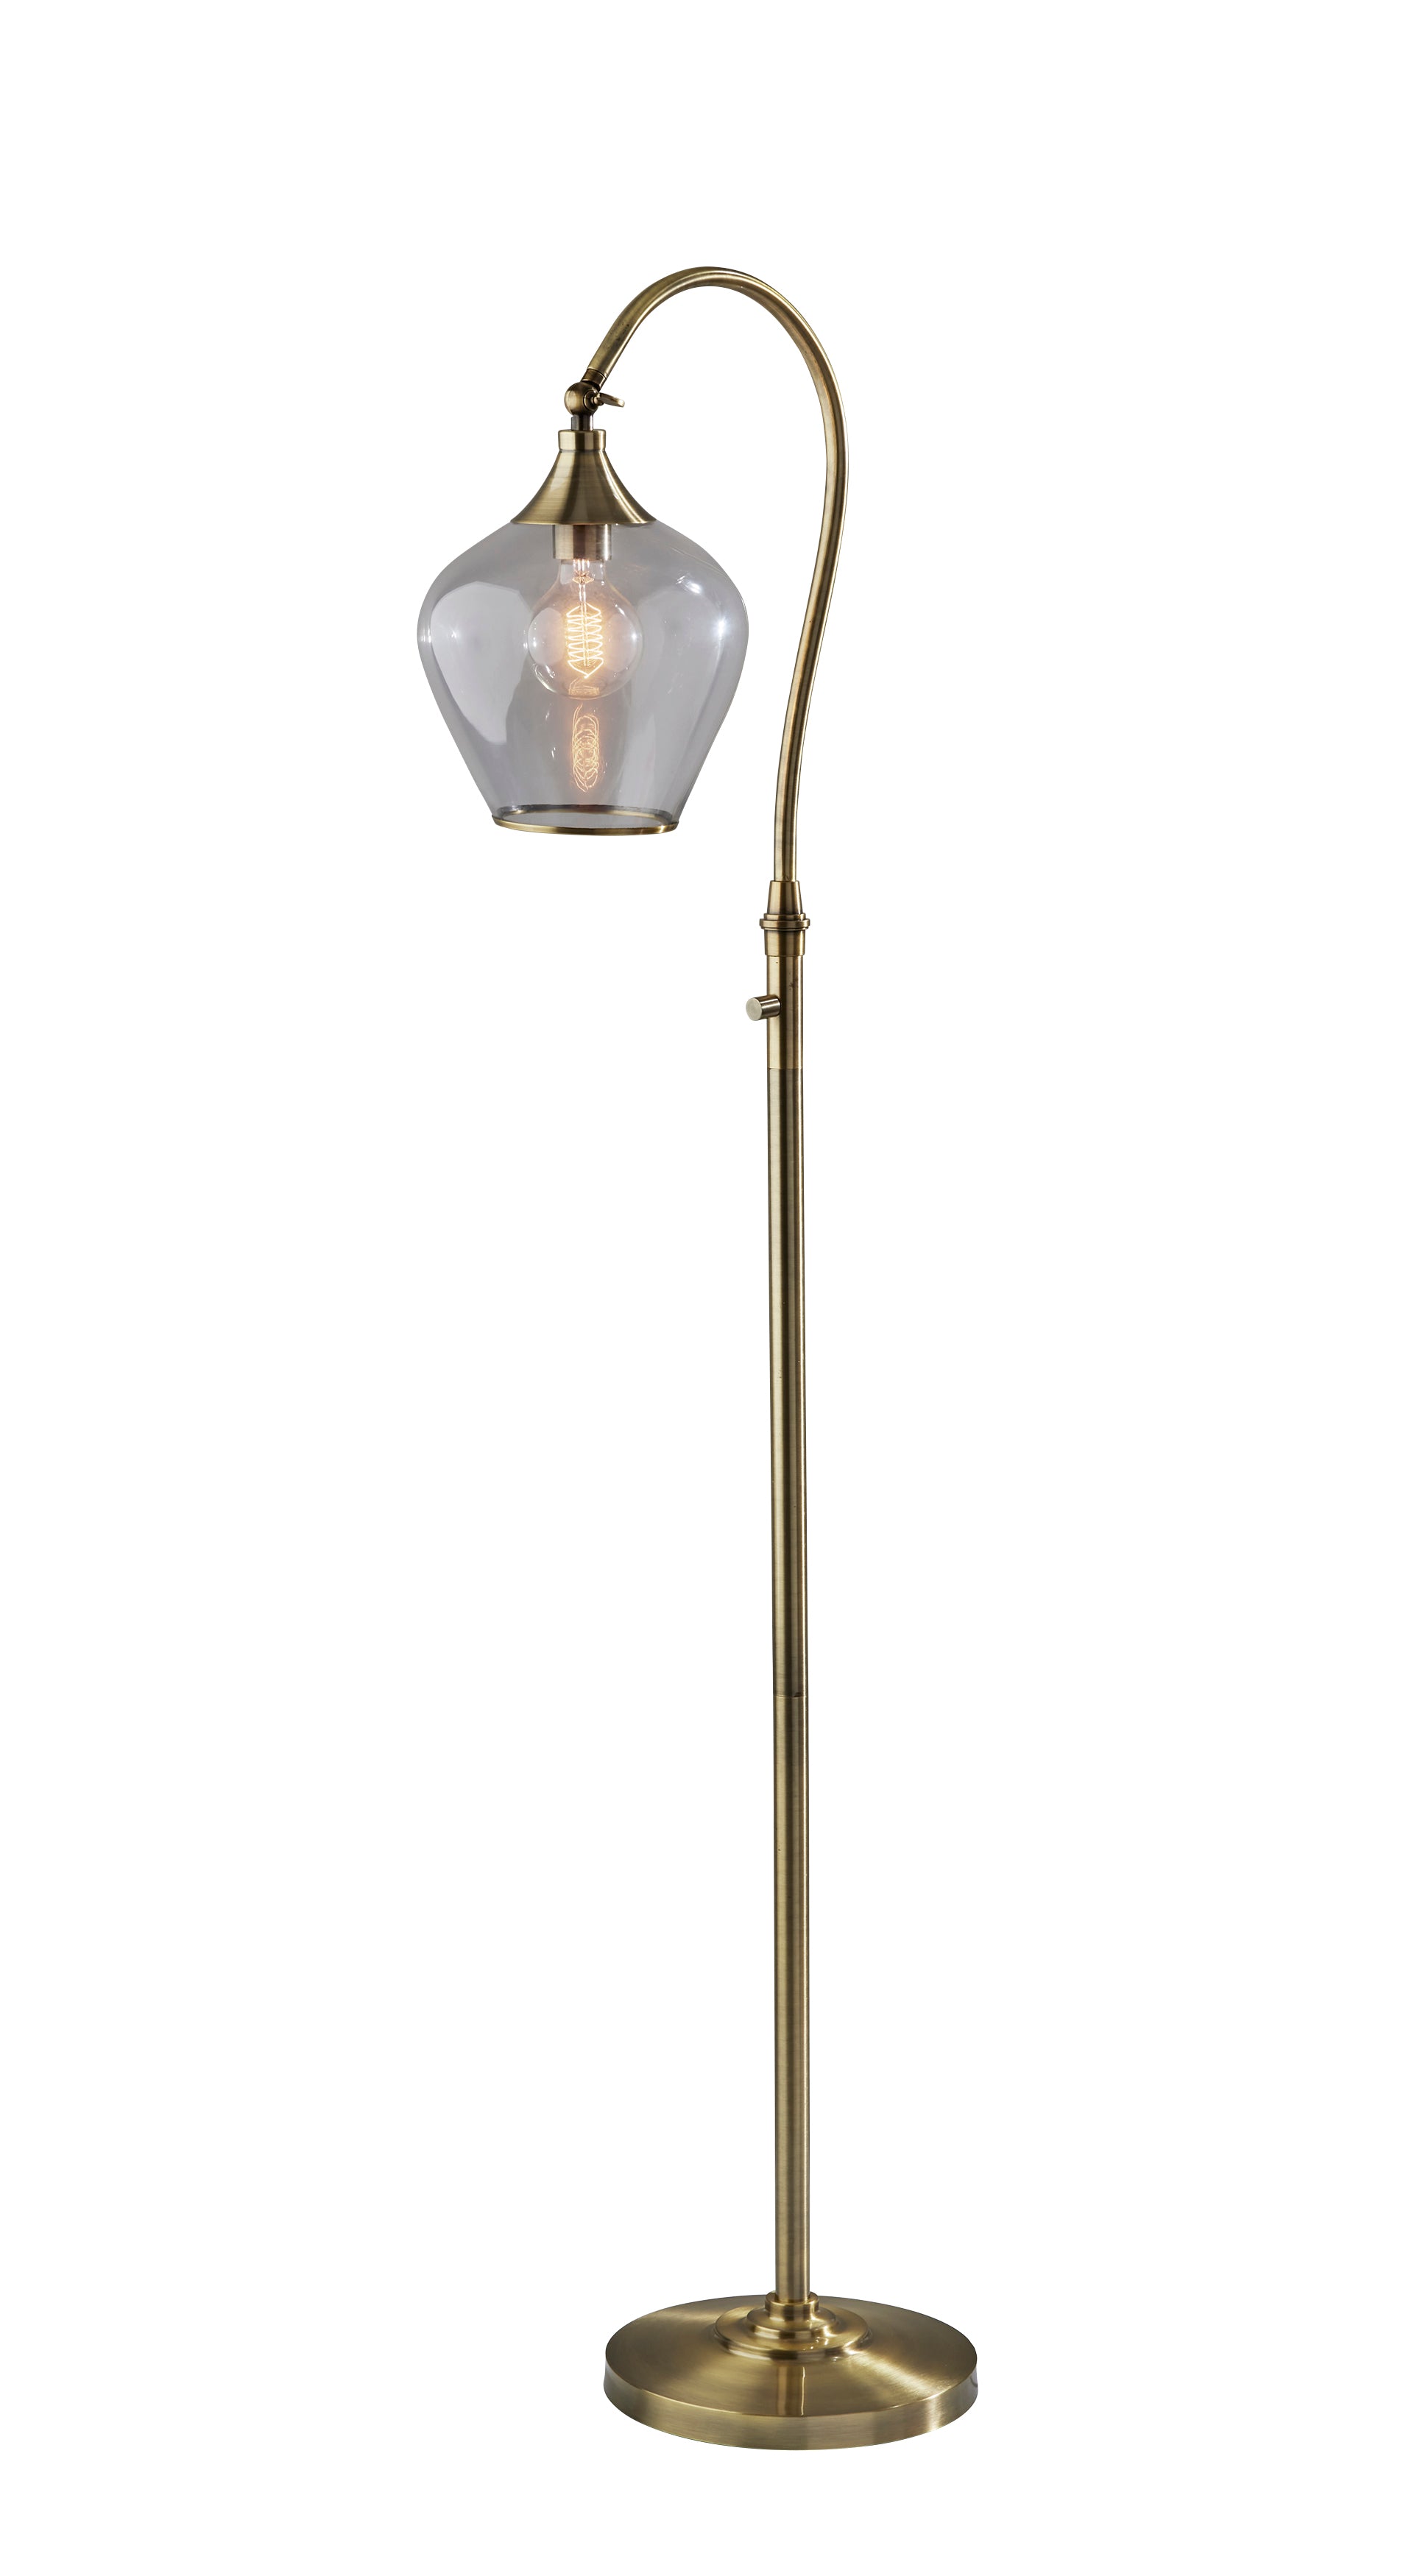 BRADFORD Lampe sur pied Or - 3923-21 | ADESSO